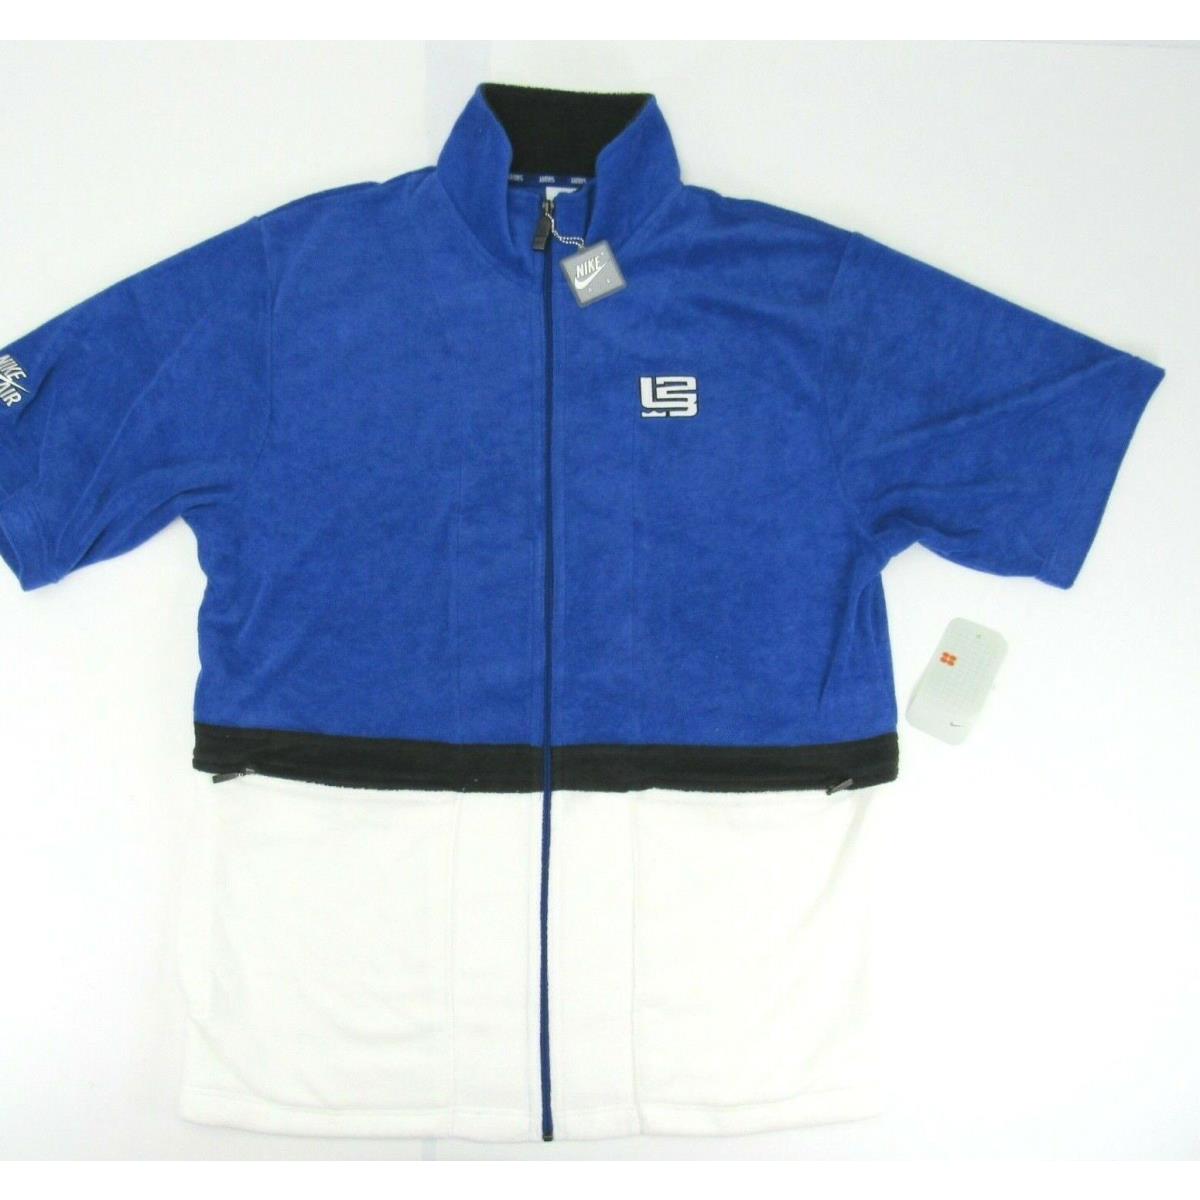 Nike Lebron James Vintage Lounging Jacket Mens Size L 136902 401 Rare